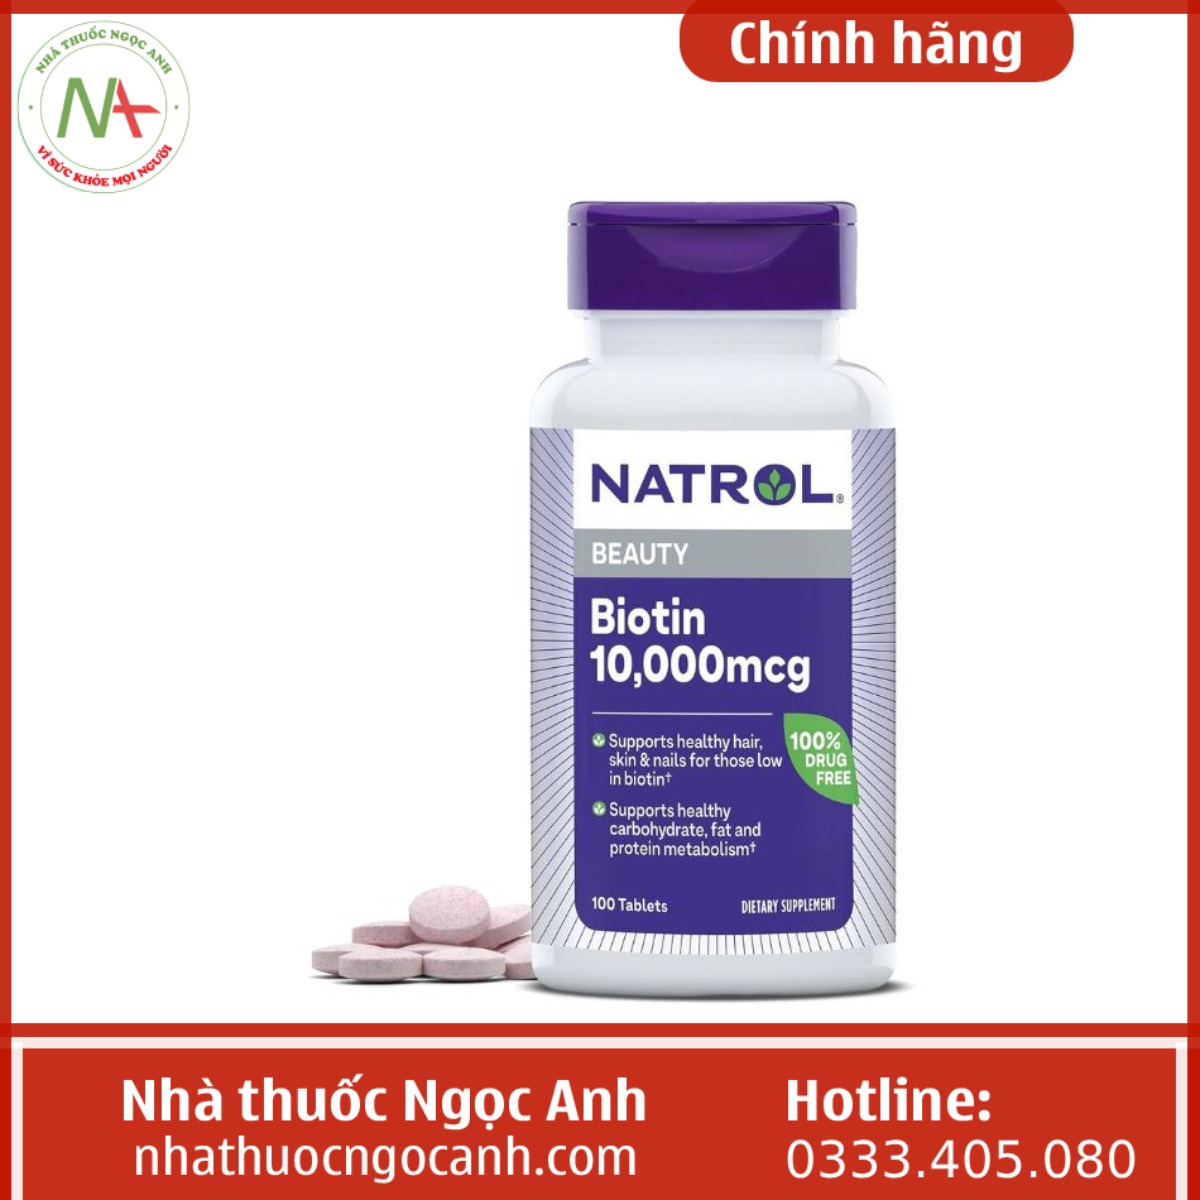 Natrol Beauty Biotin 10,000mcg